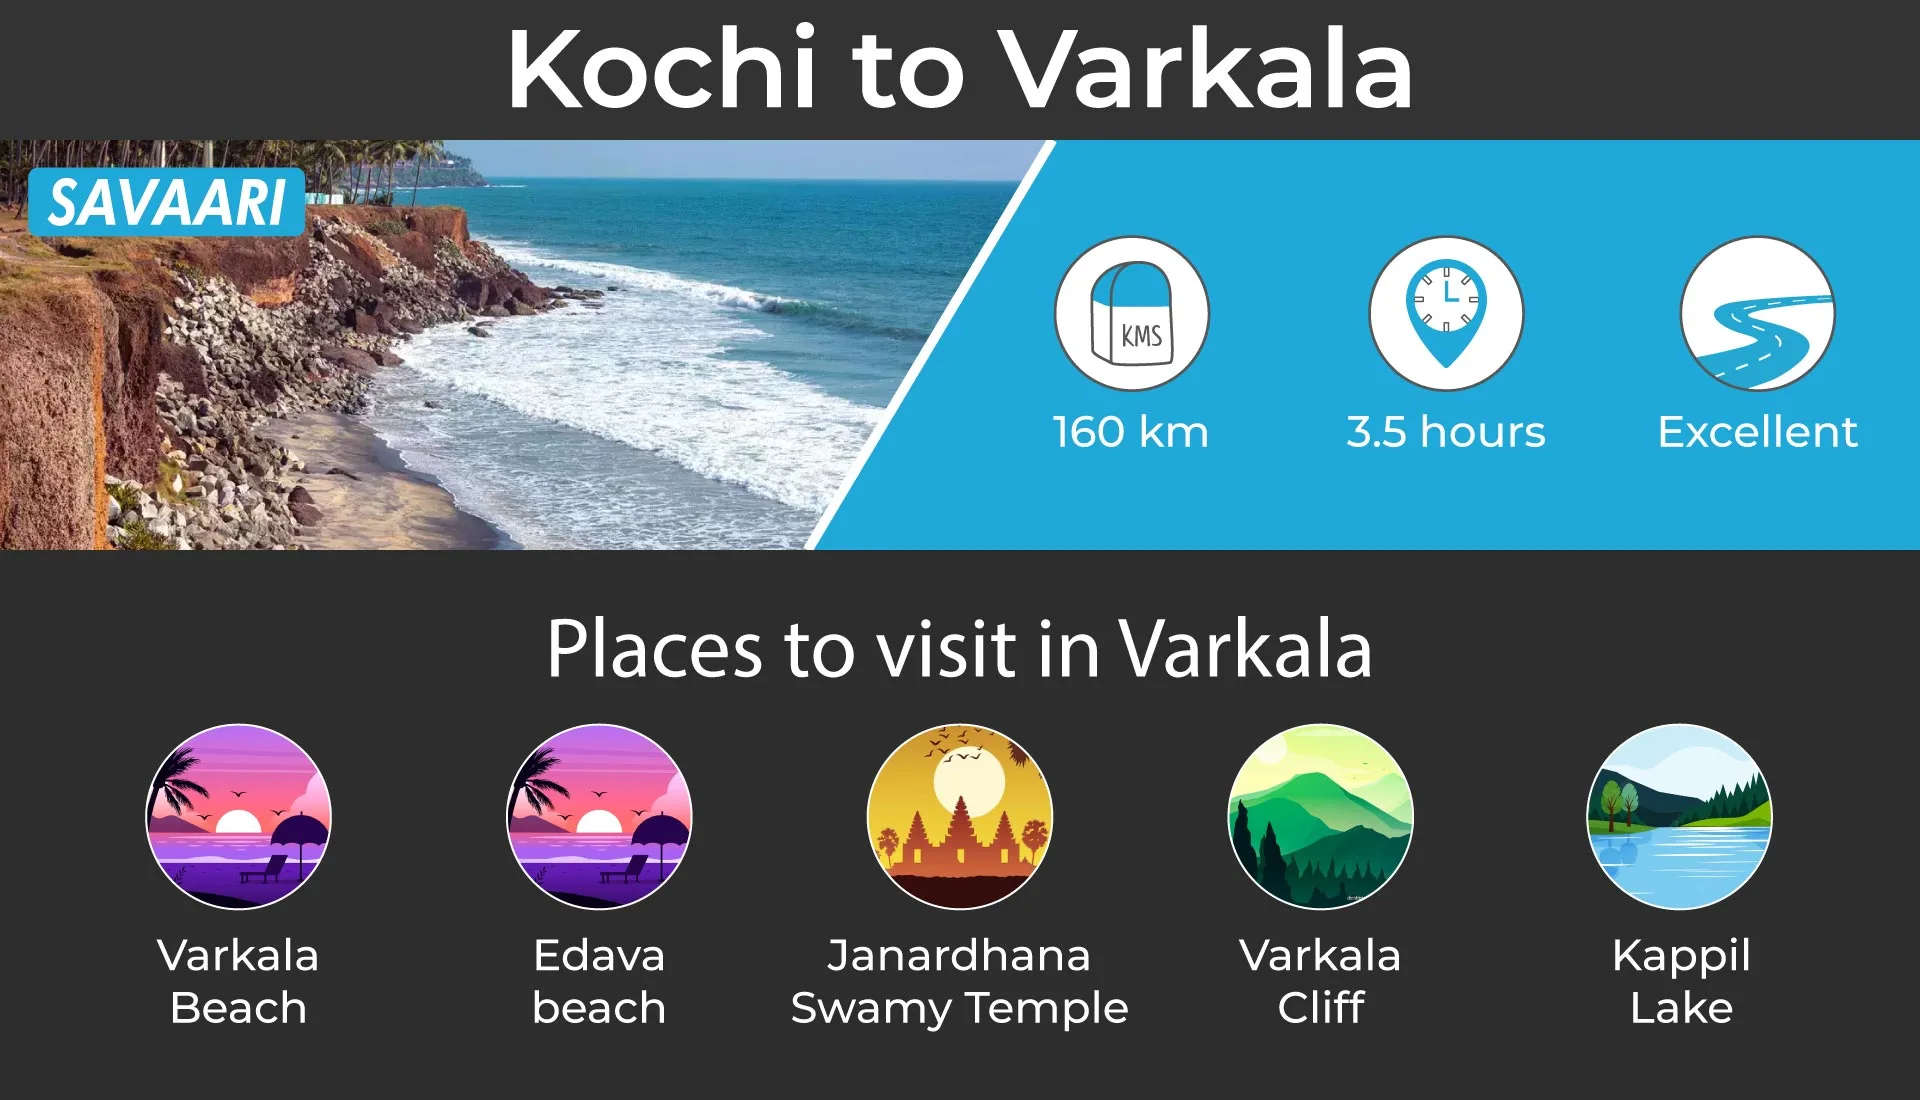 Beach destination near Kochi, Varkala